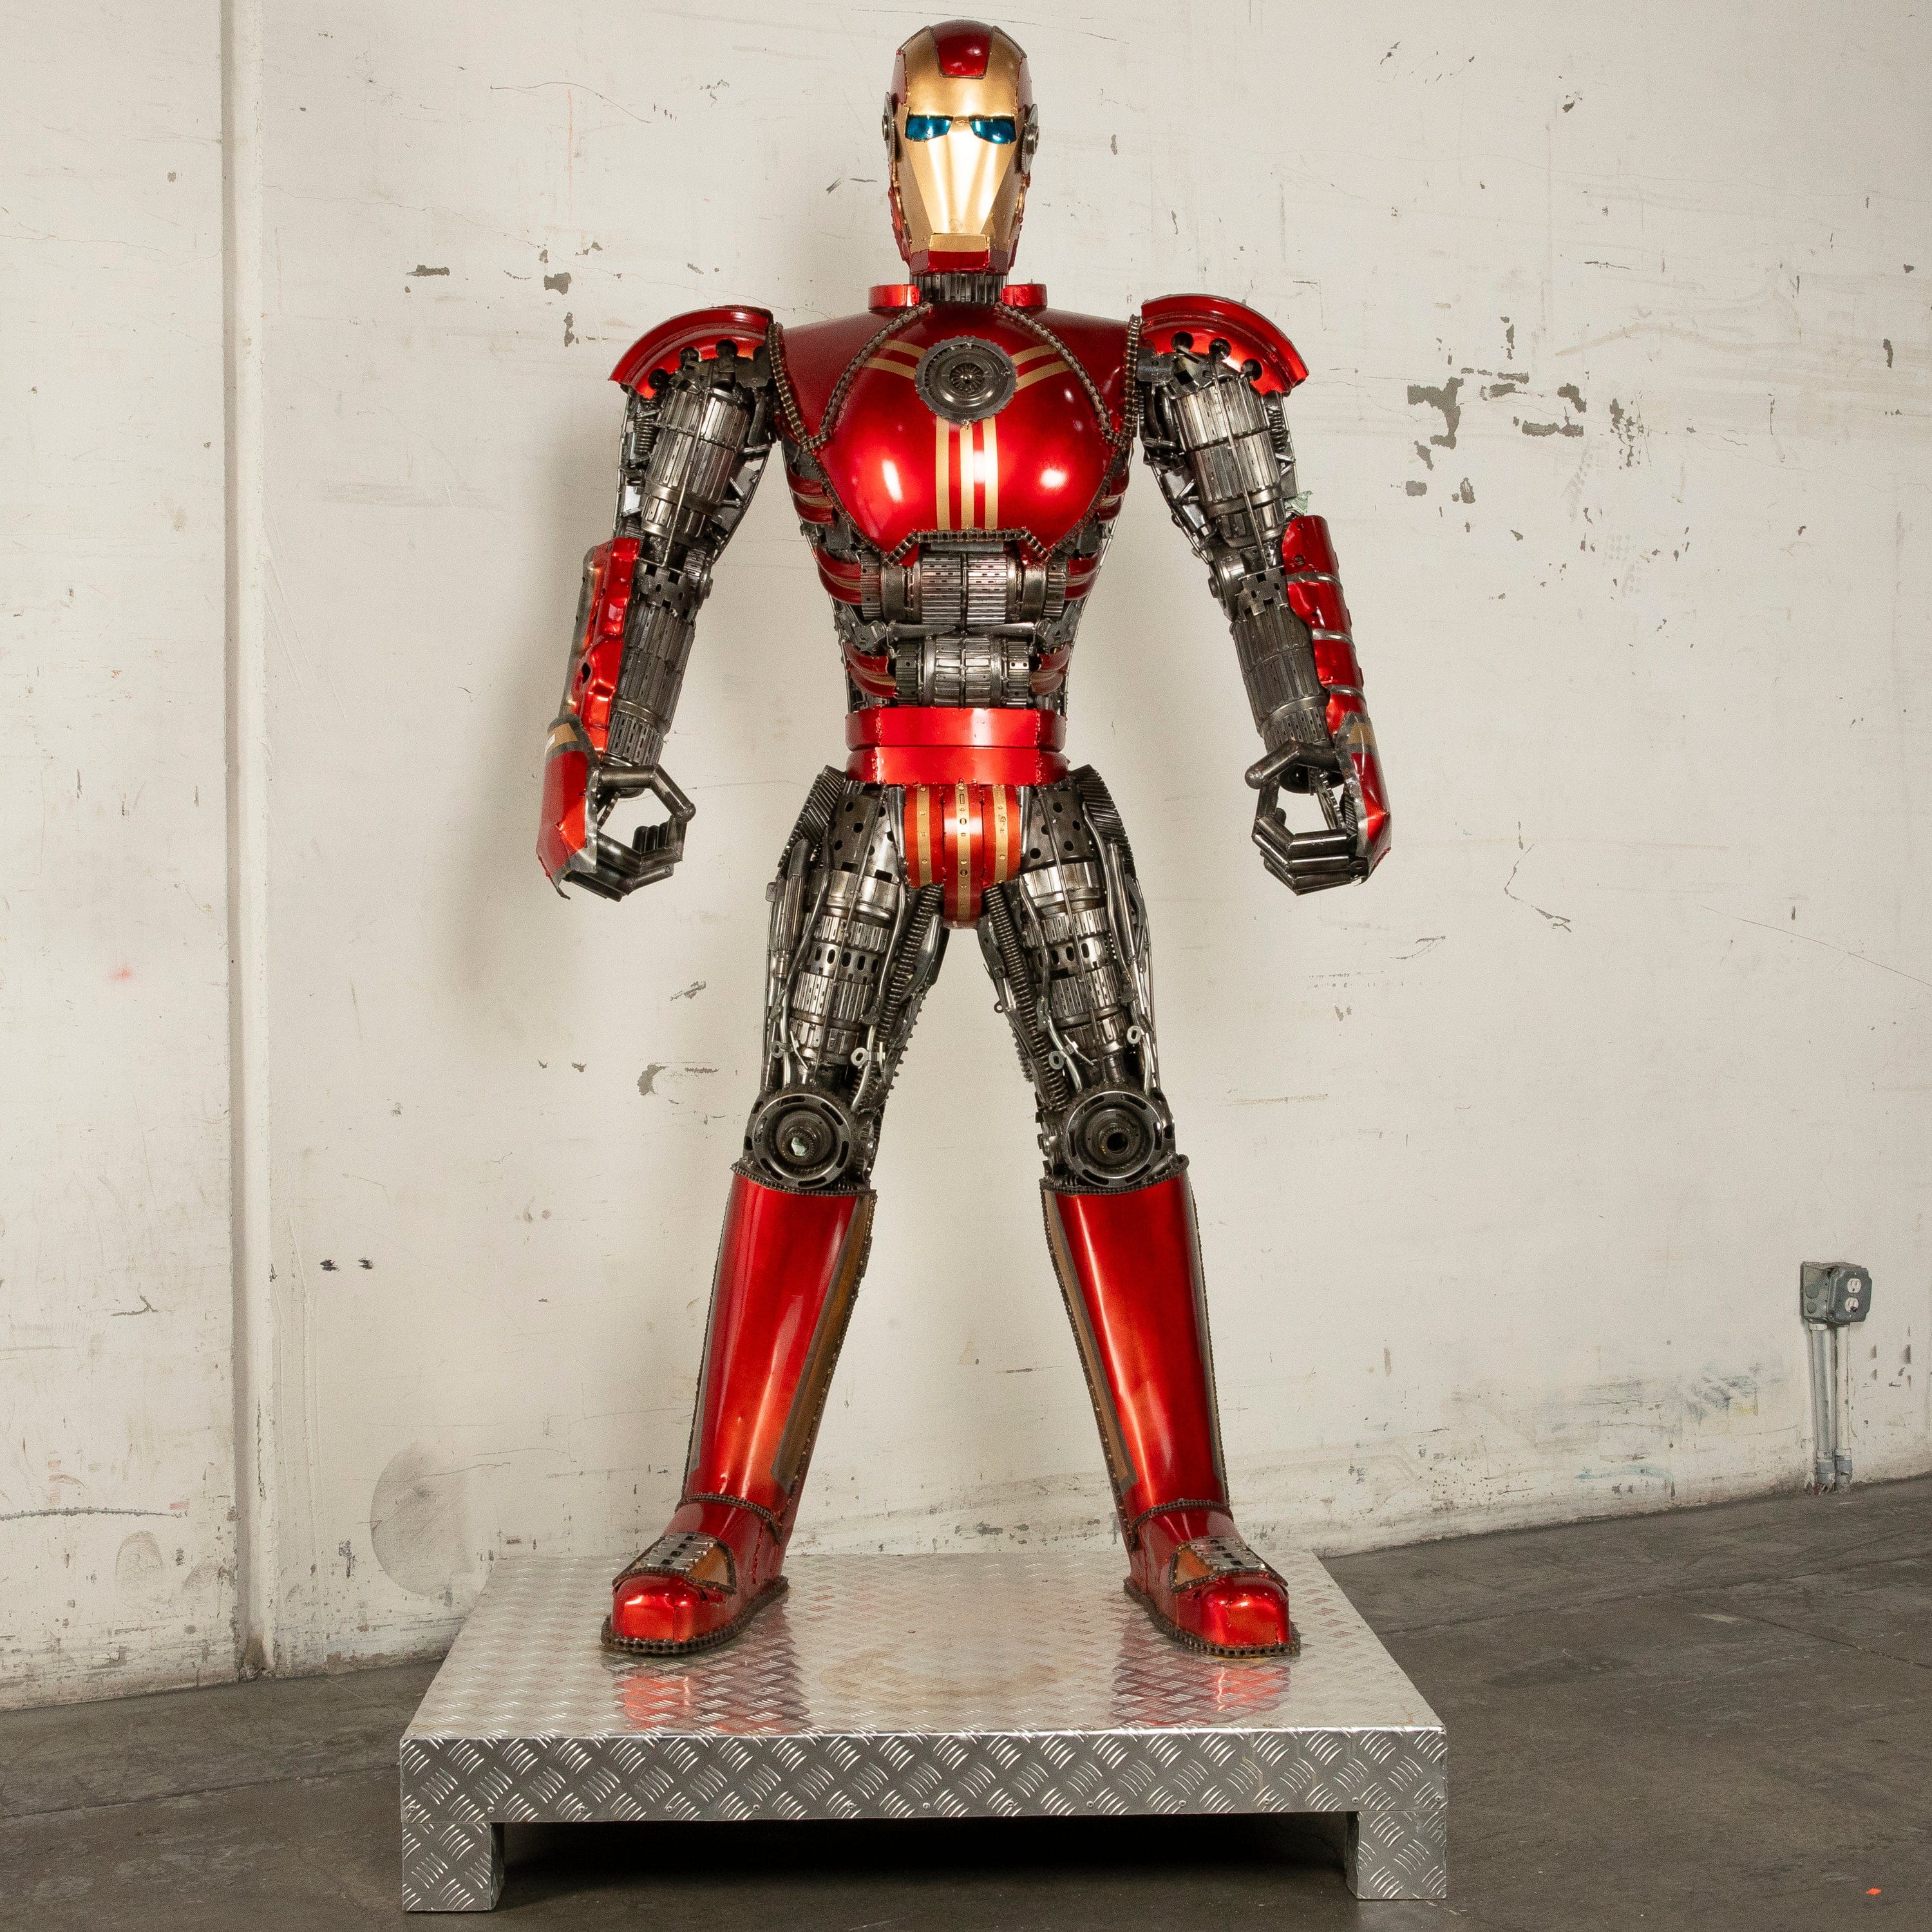 Kalifano Recycled Metal Art 79" Iron Man Inspired Recycled Metal Art Sculpture RMS-IMR200-S07